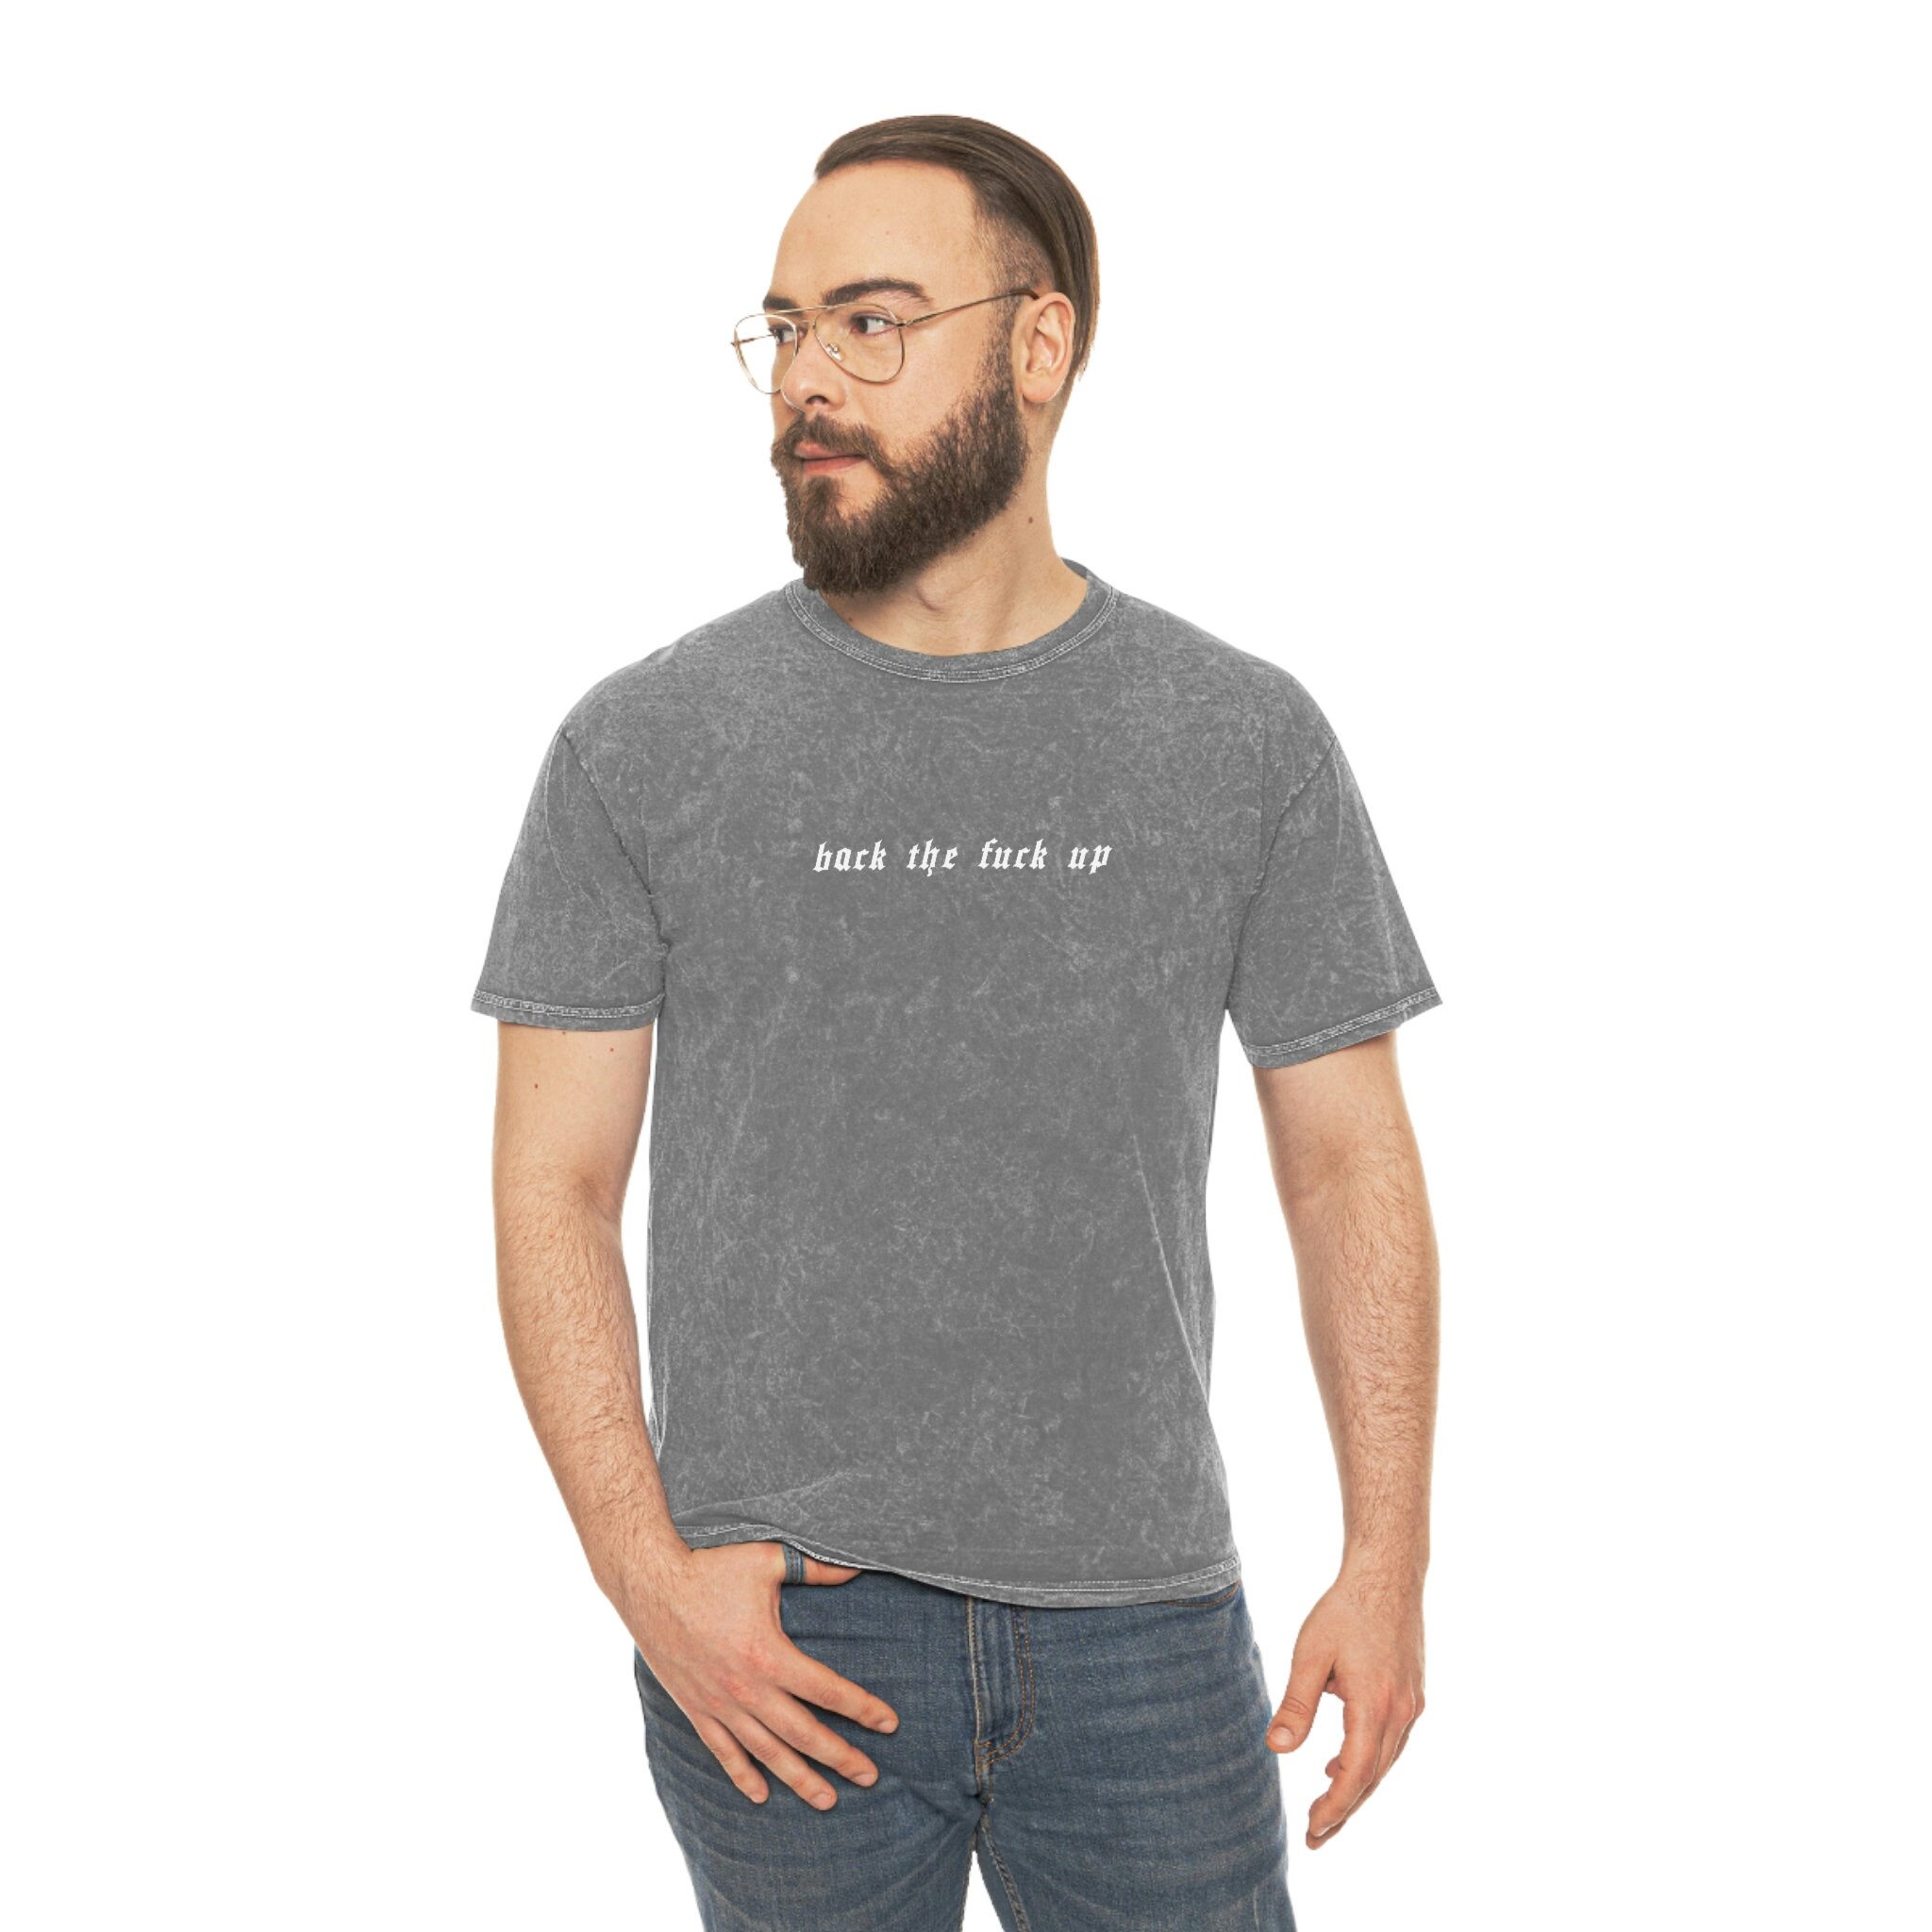 Back up Mineral Wash T-shirt - Etsy